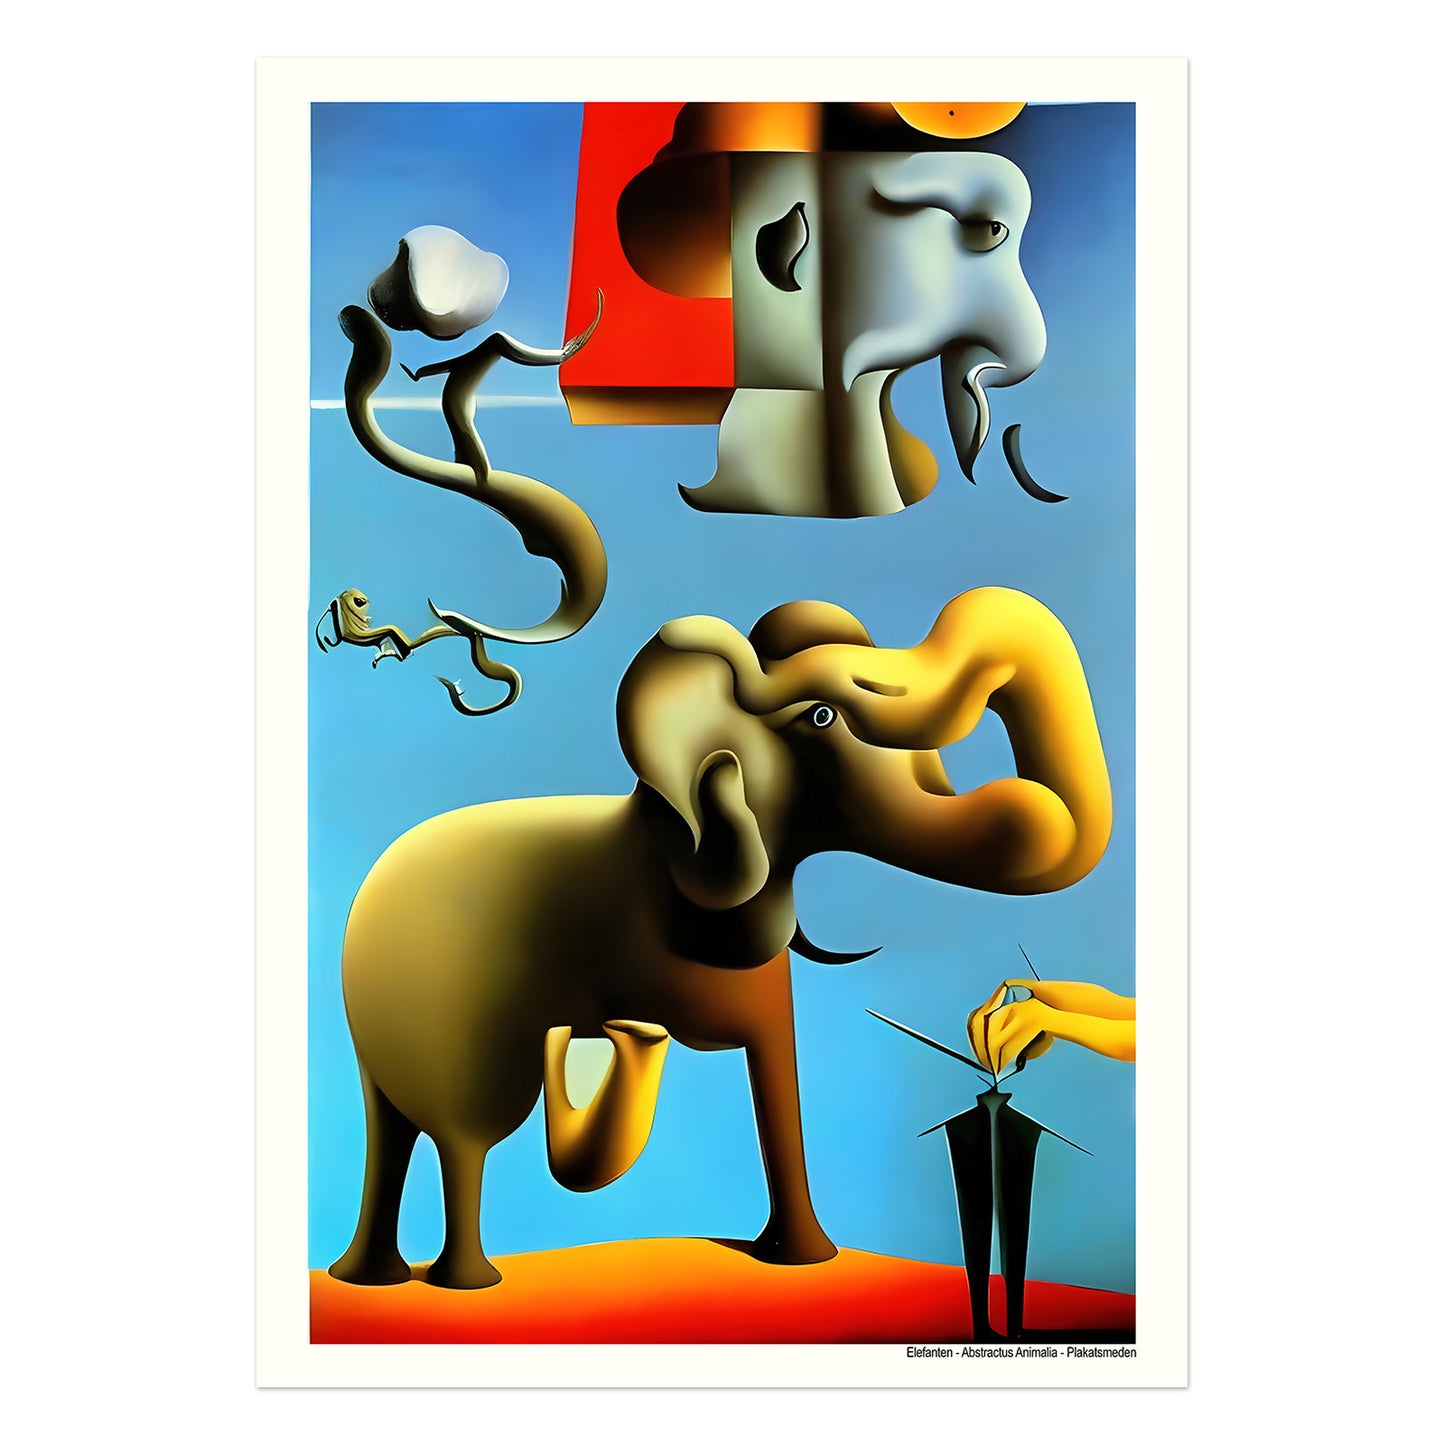 The Elephant (Elefanten)